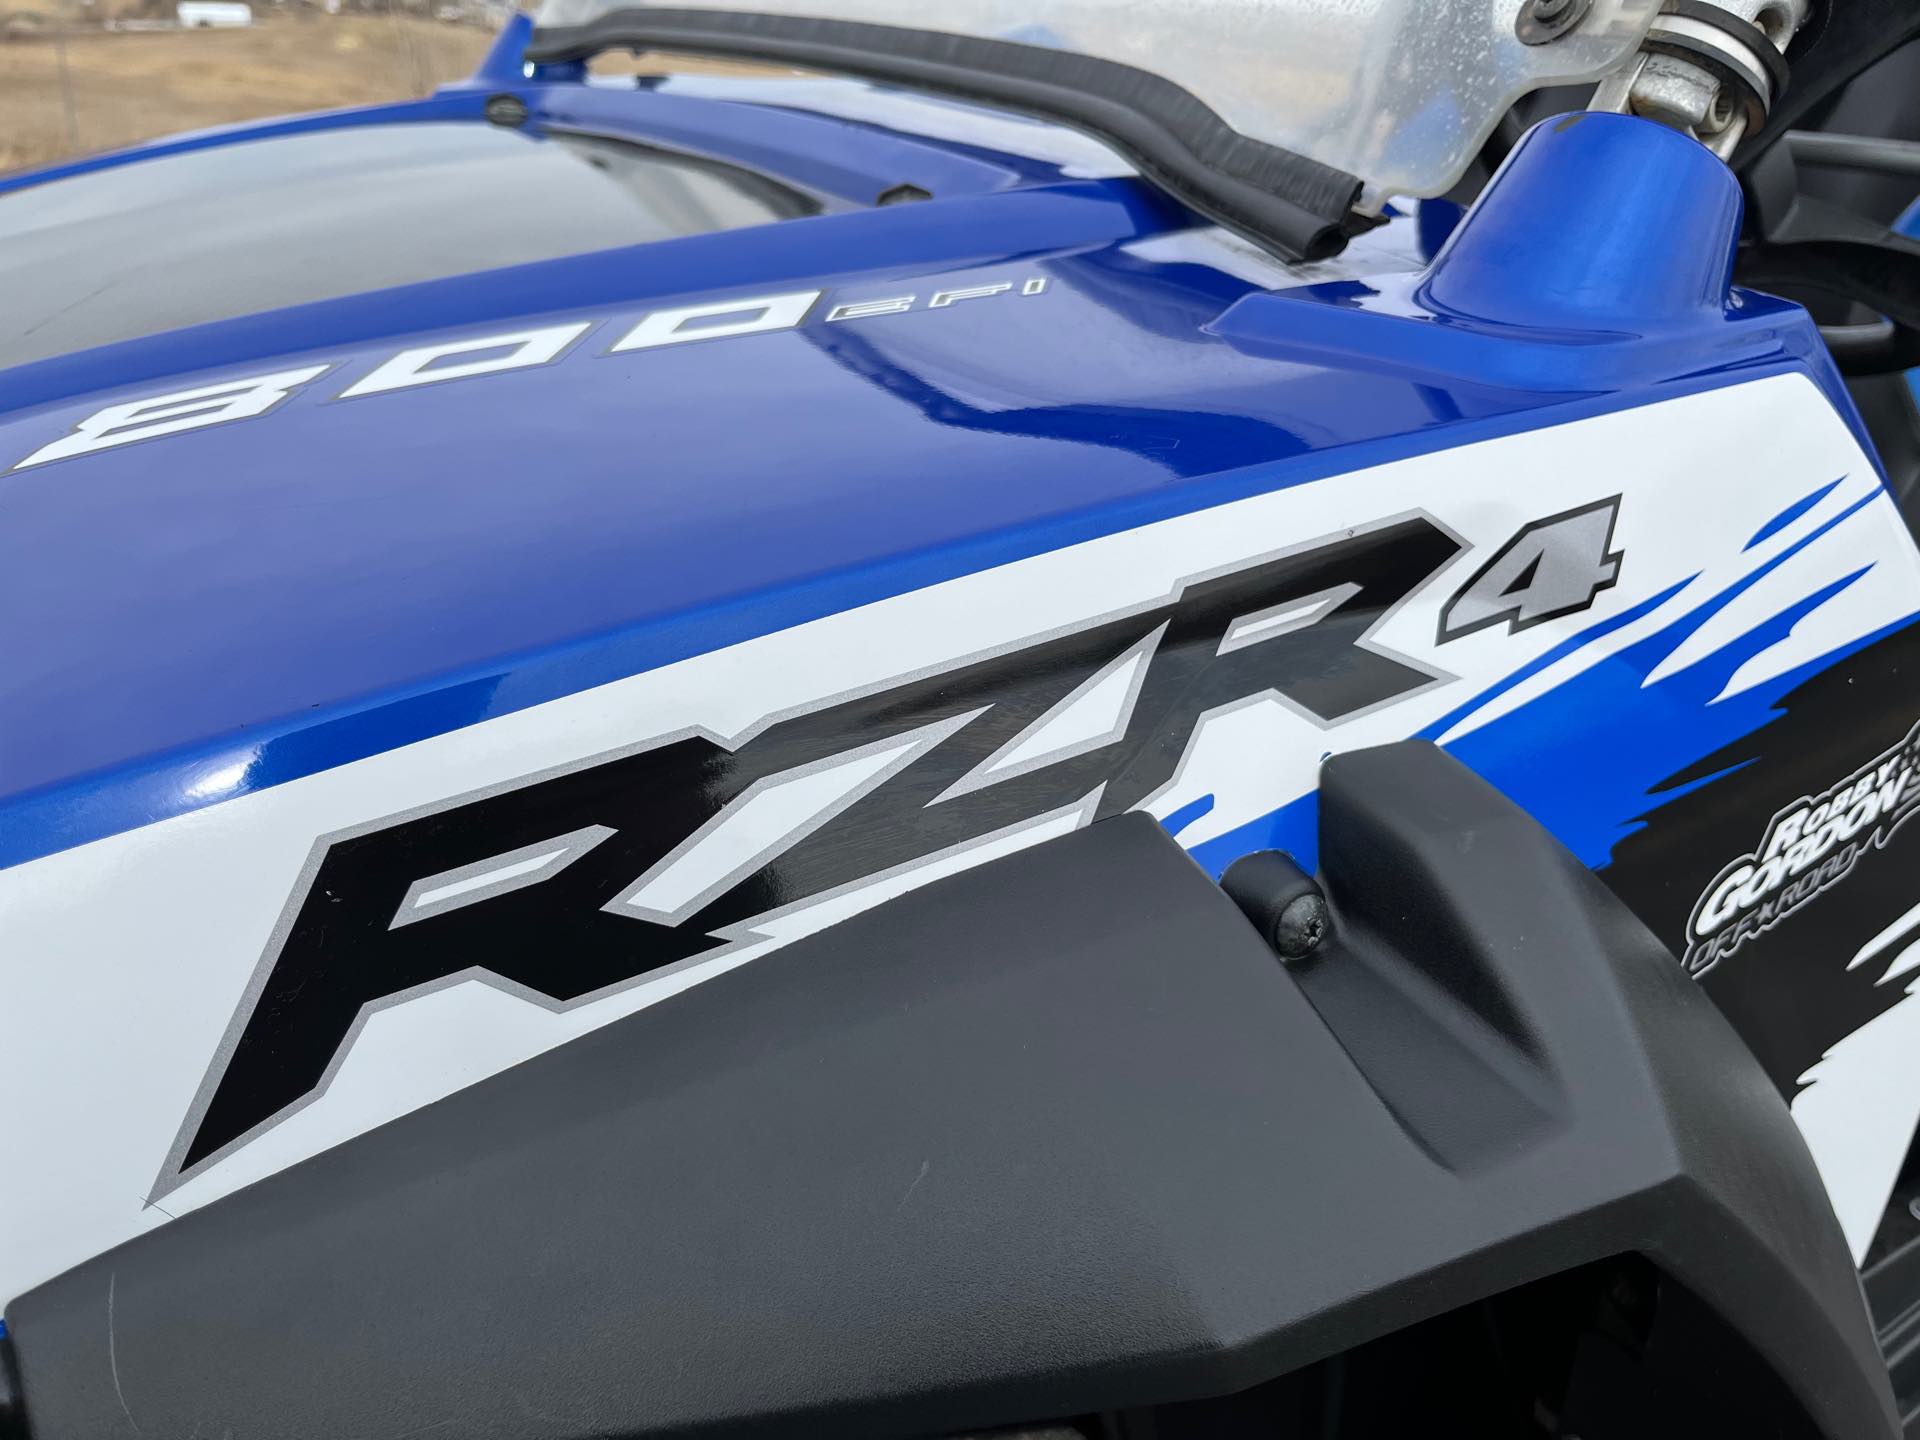 2010 Polaris Ranger RZR 4 Robbie Gordon Edition at Mount Rushmore Motorsports